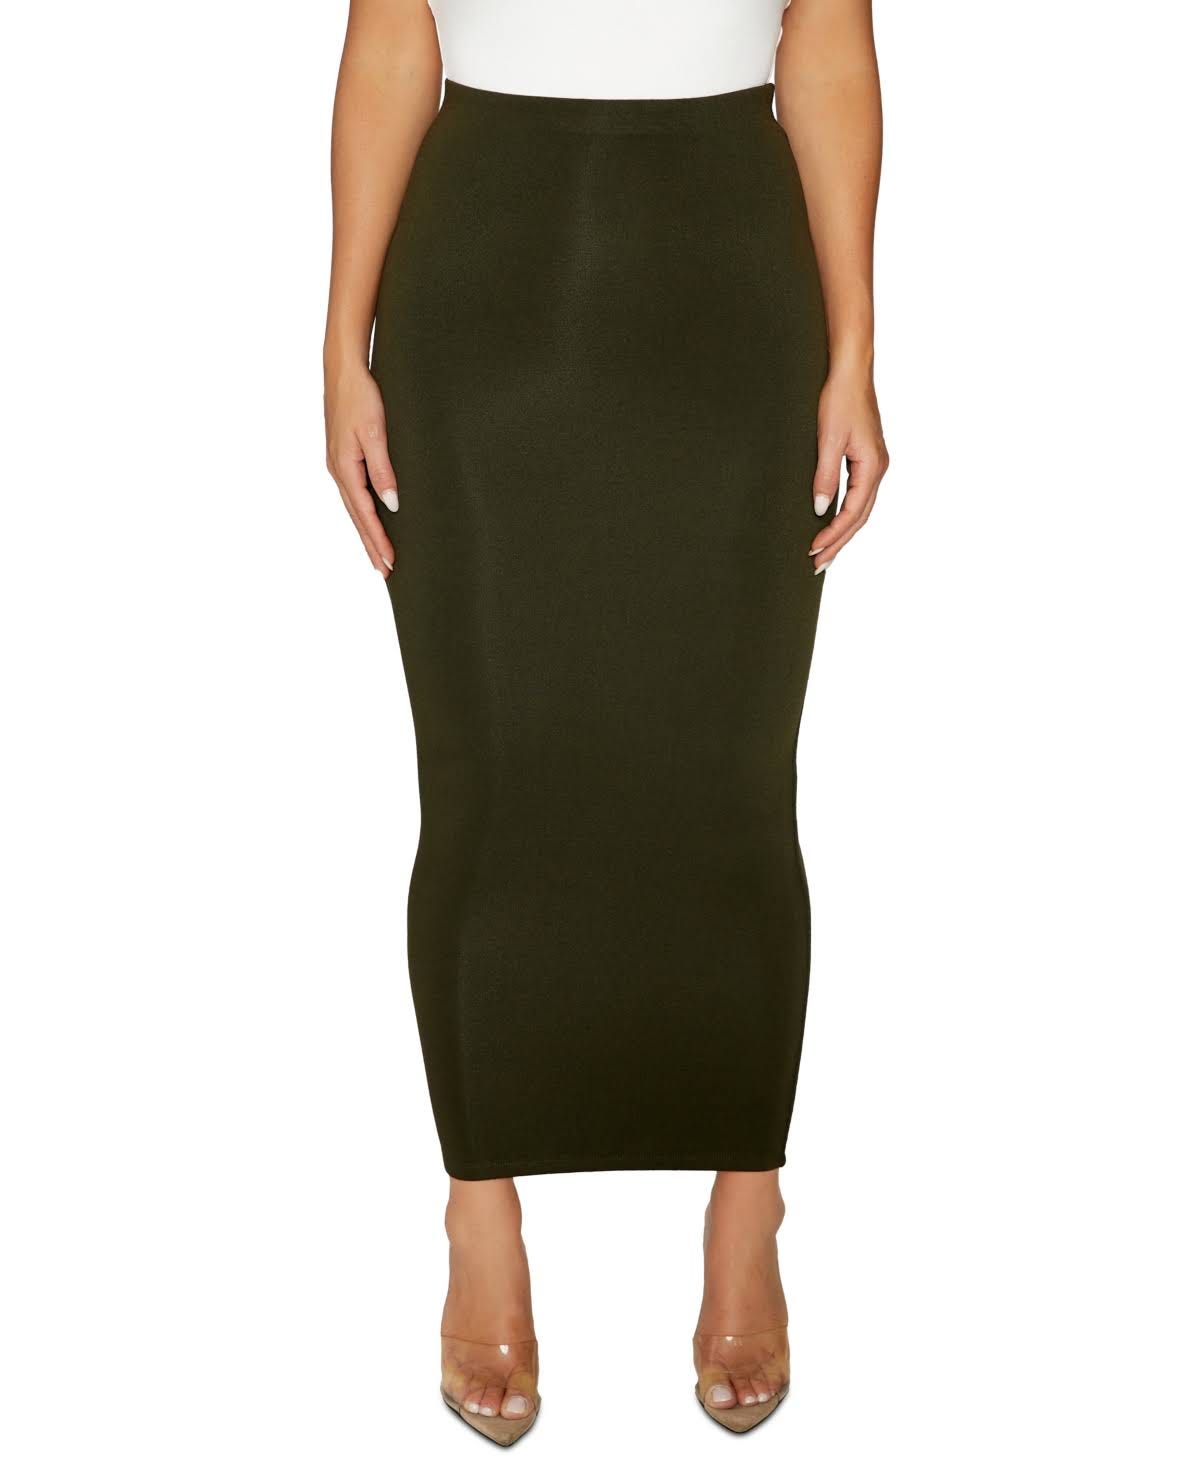 Sleek Olive Green Hourglass Midi Skirt for Curvy Women | Image